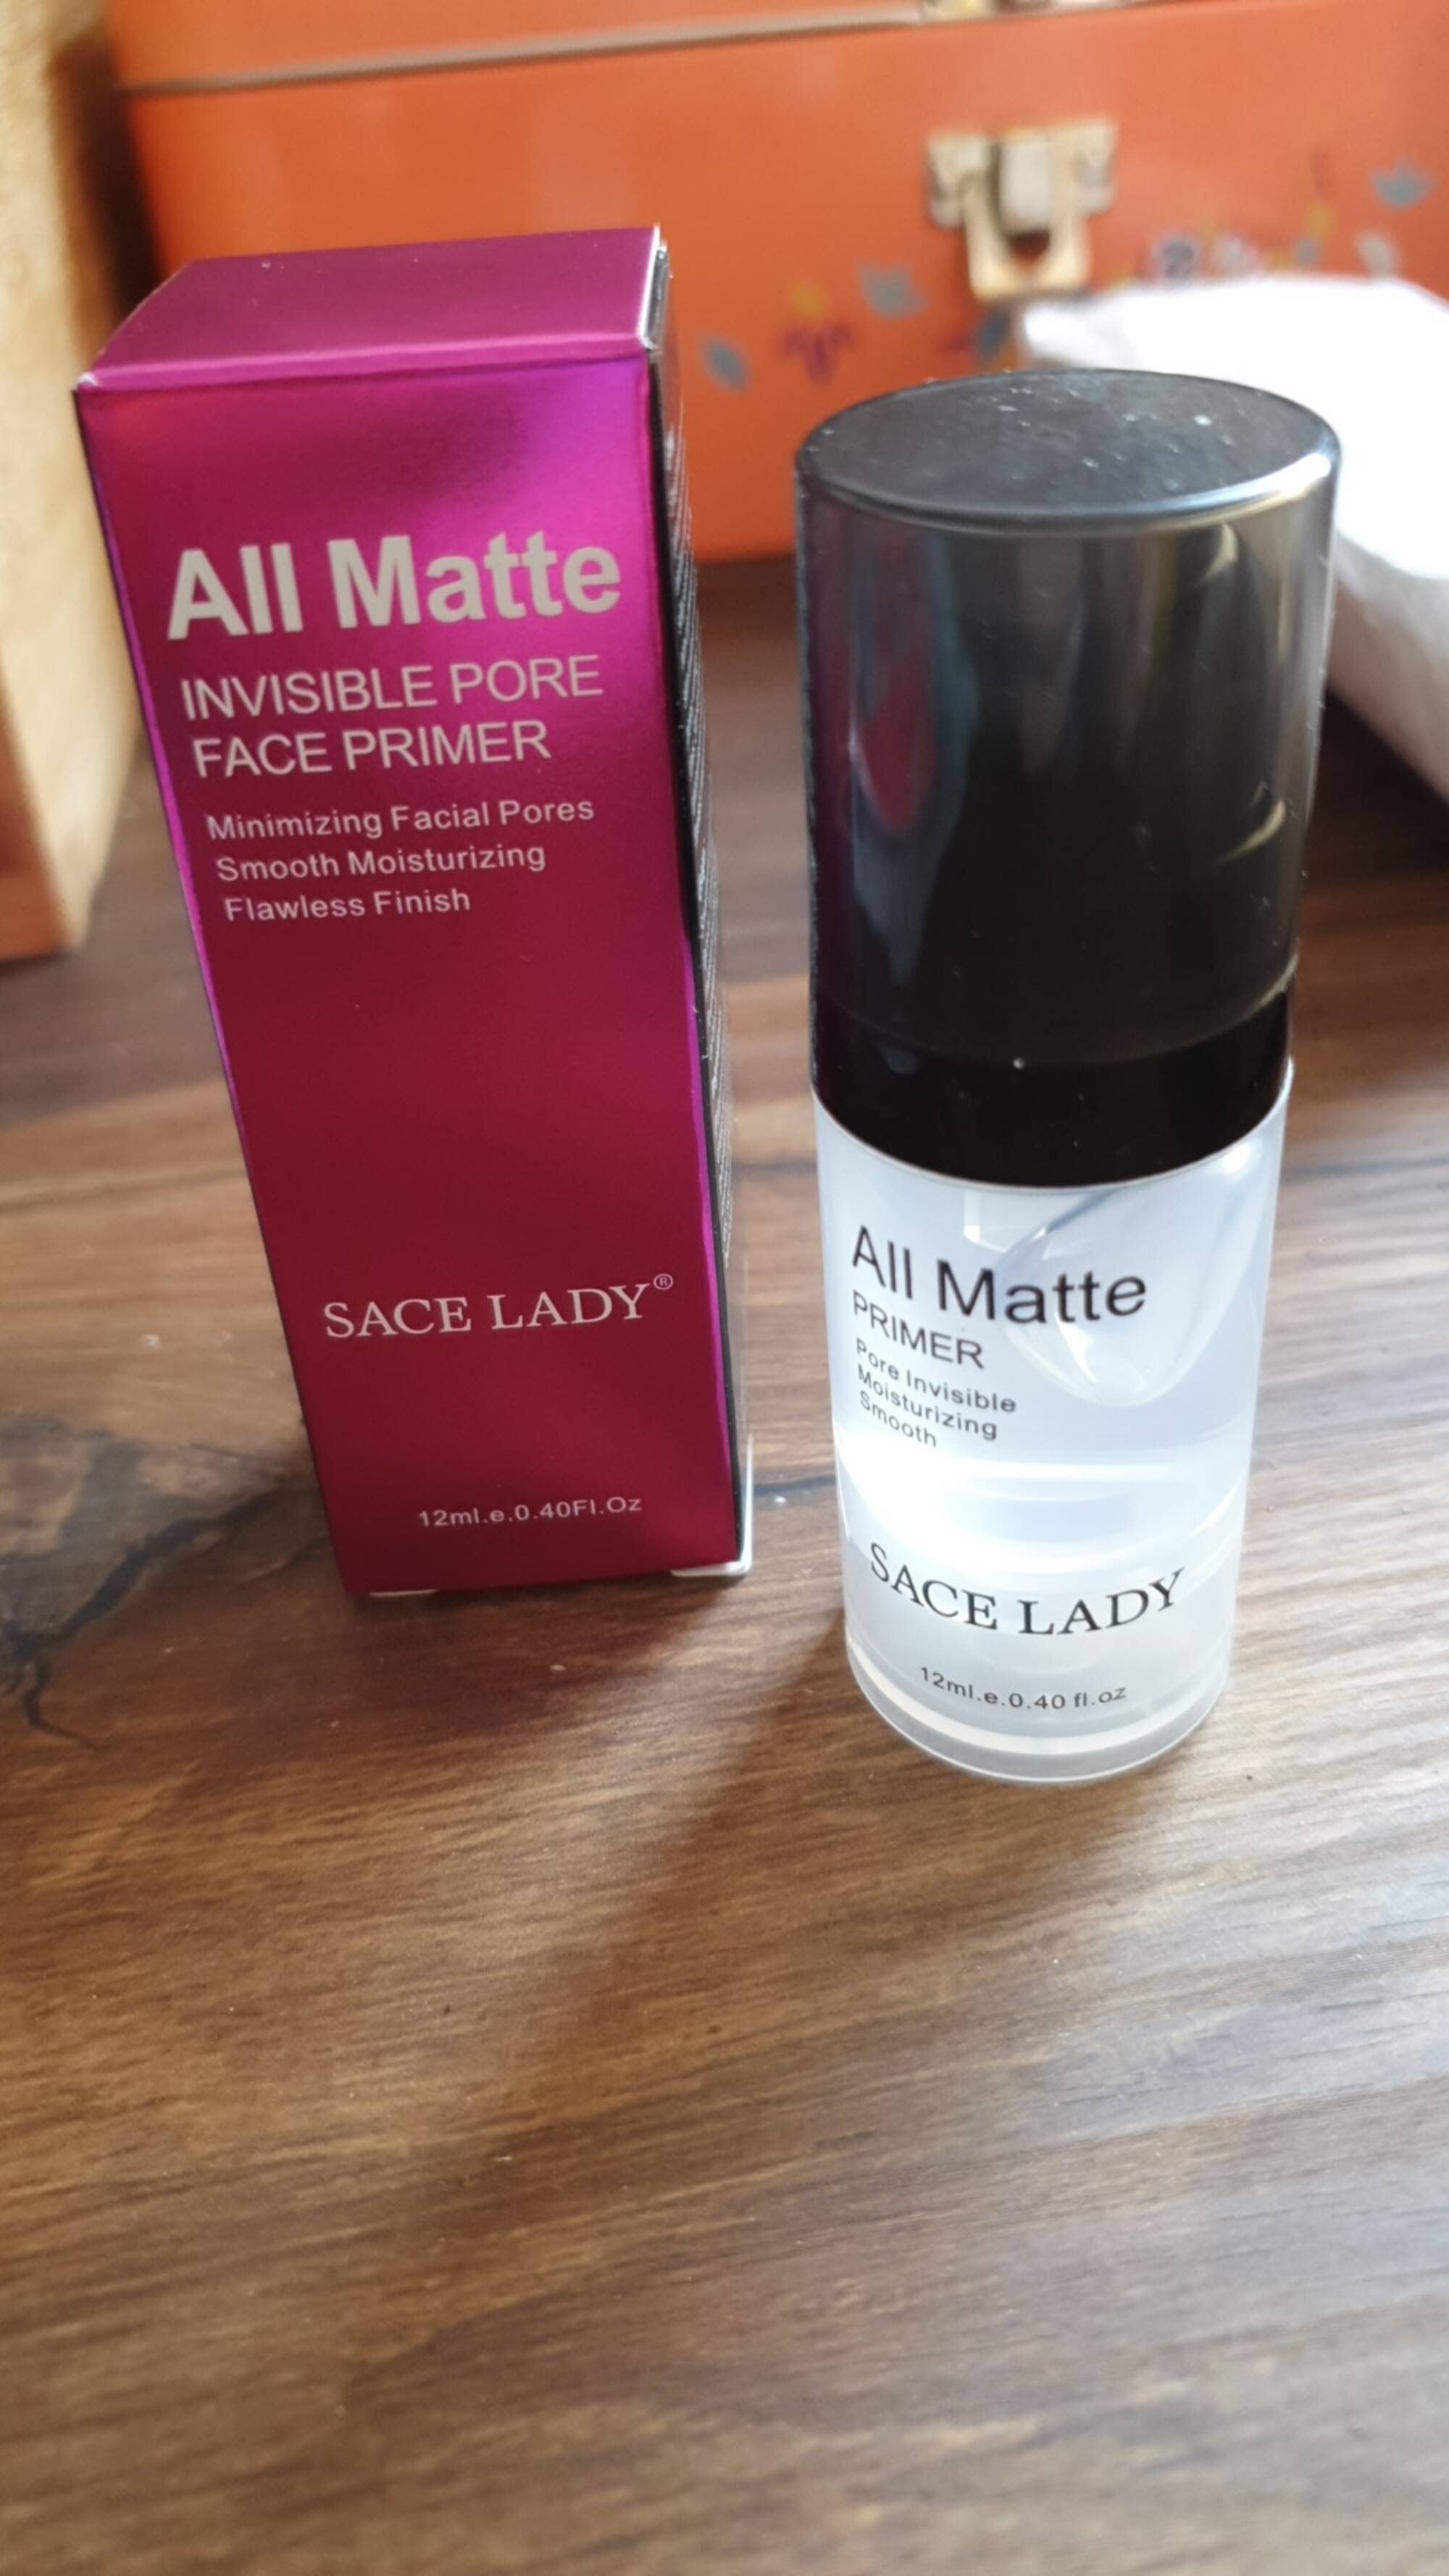 SACE LADY - All Matte - Invisible pore face primer